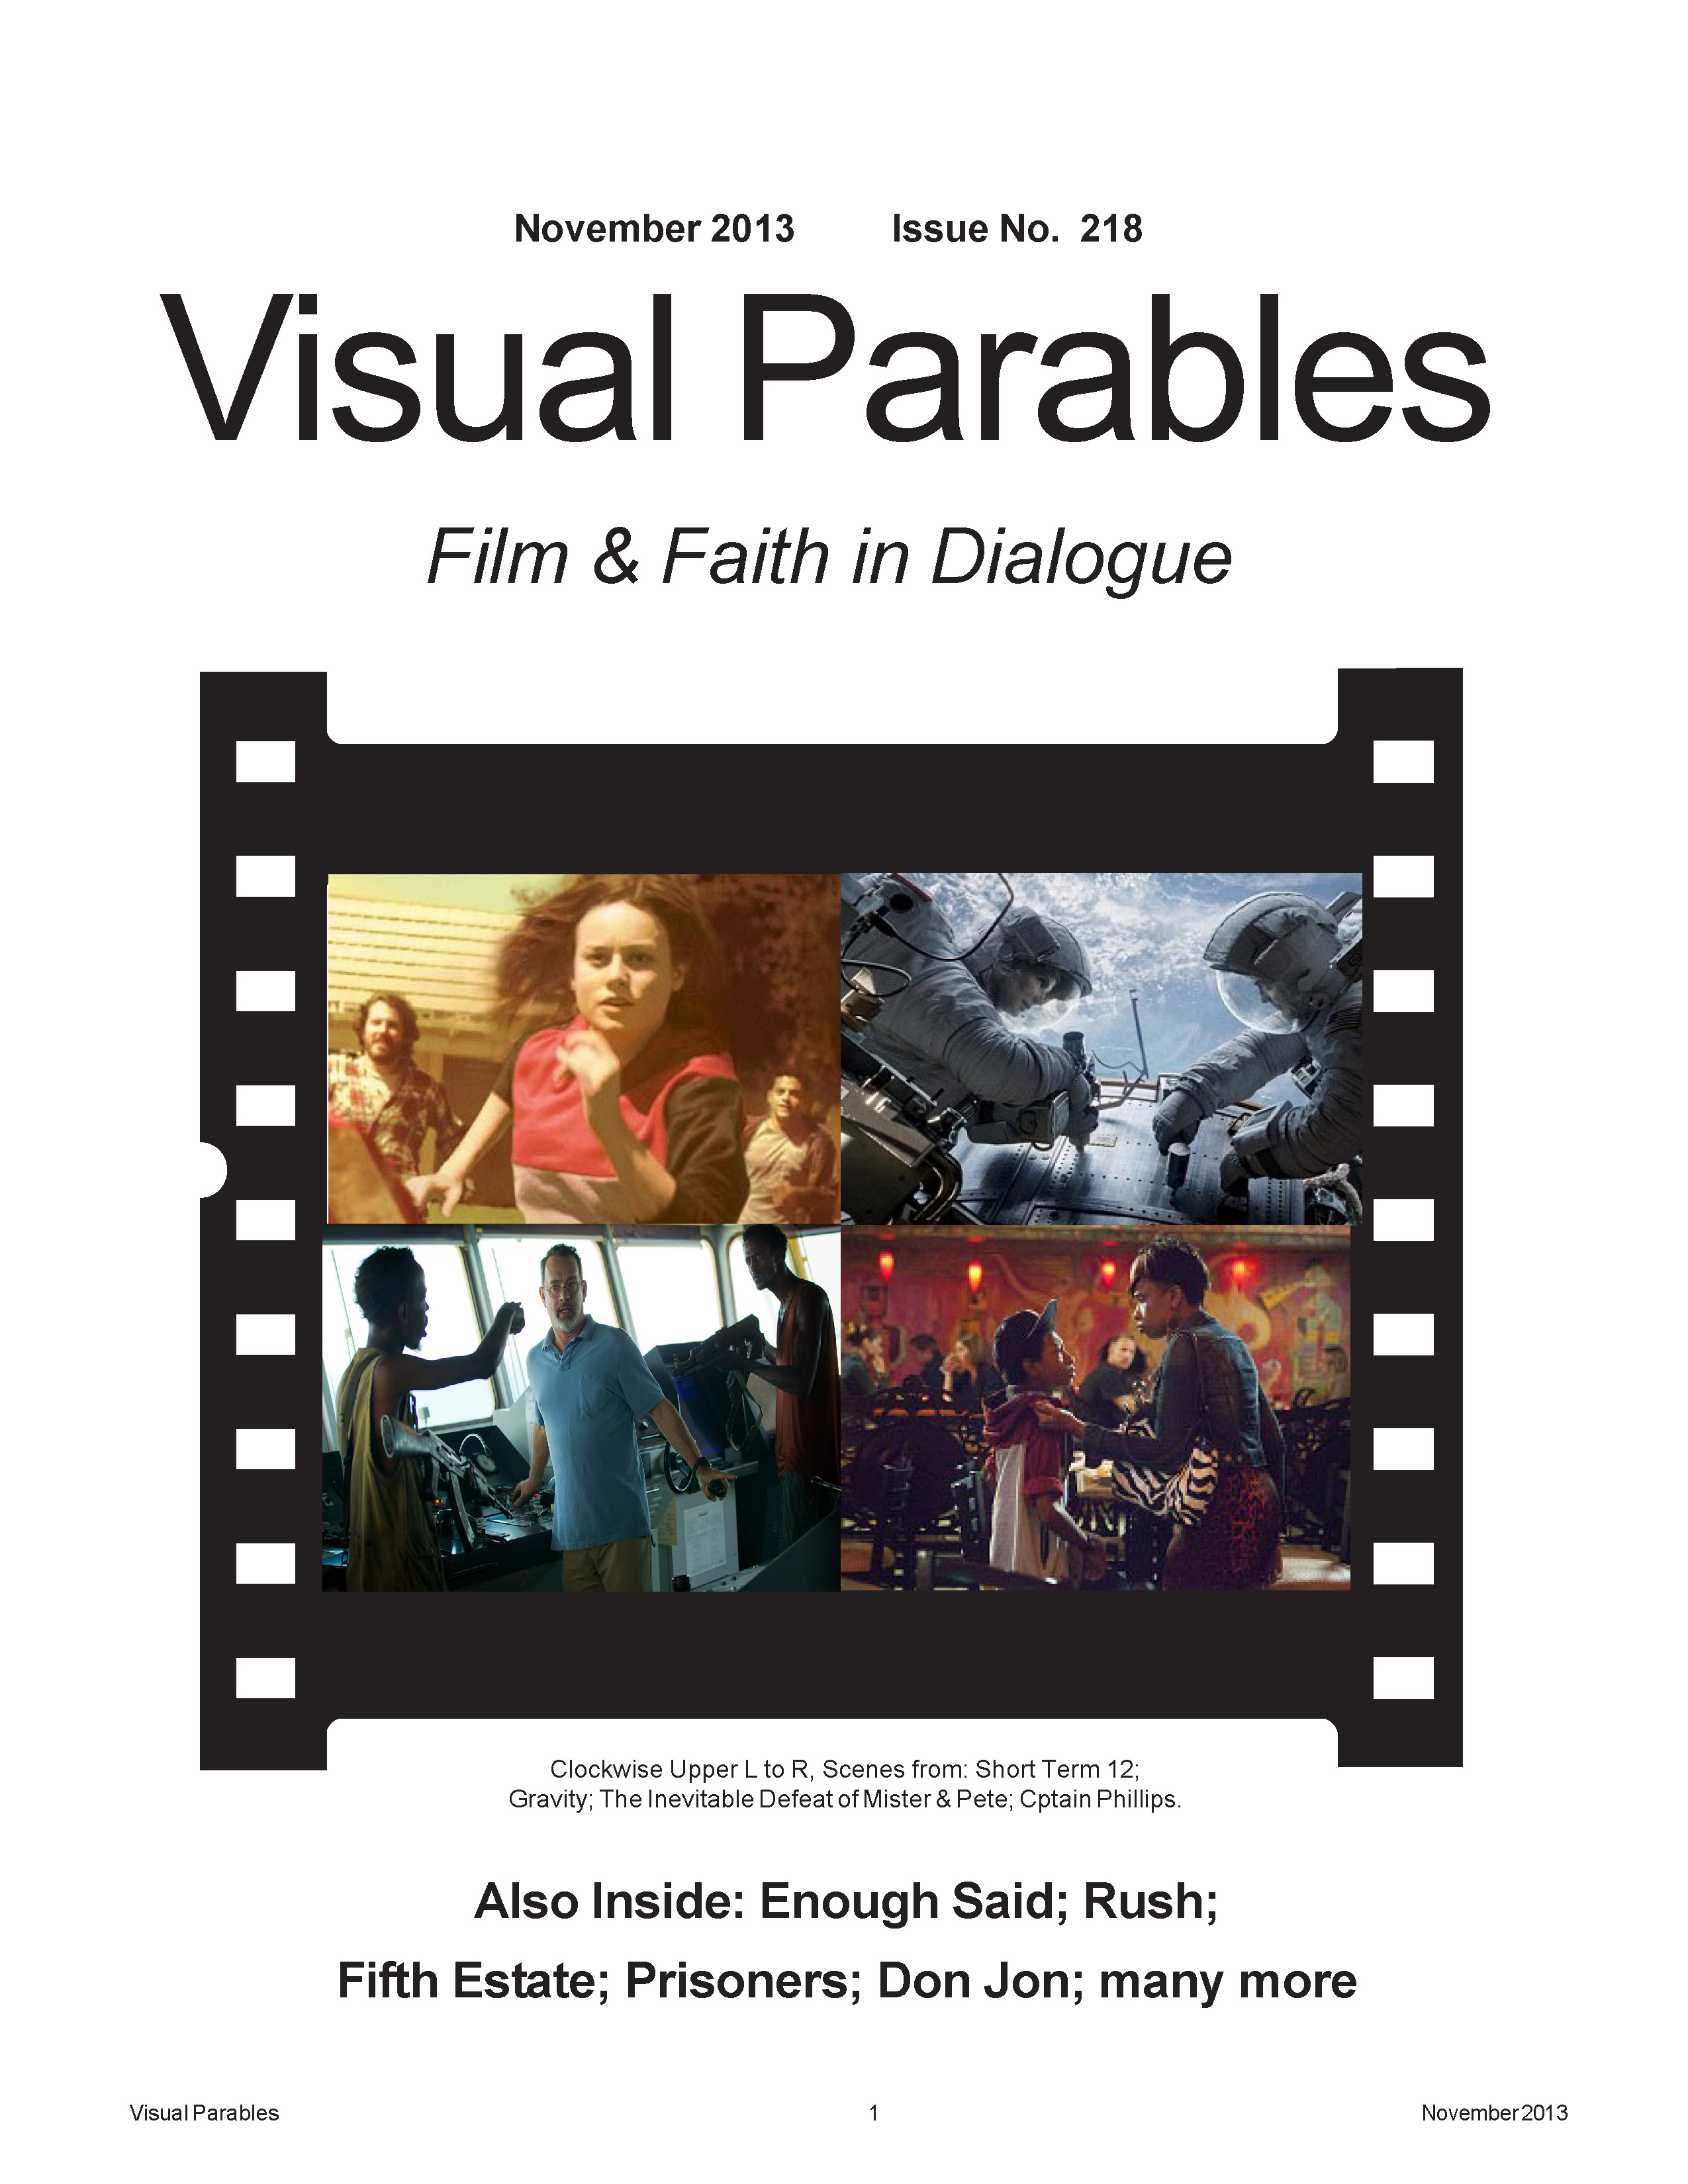 November 2013 Issue of Visual Parables